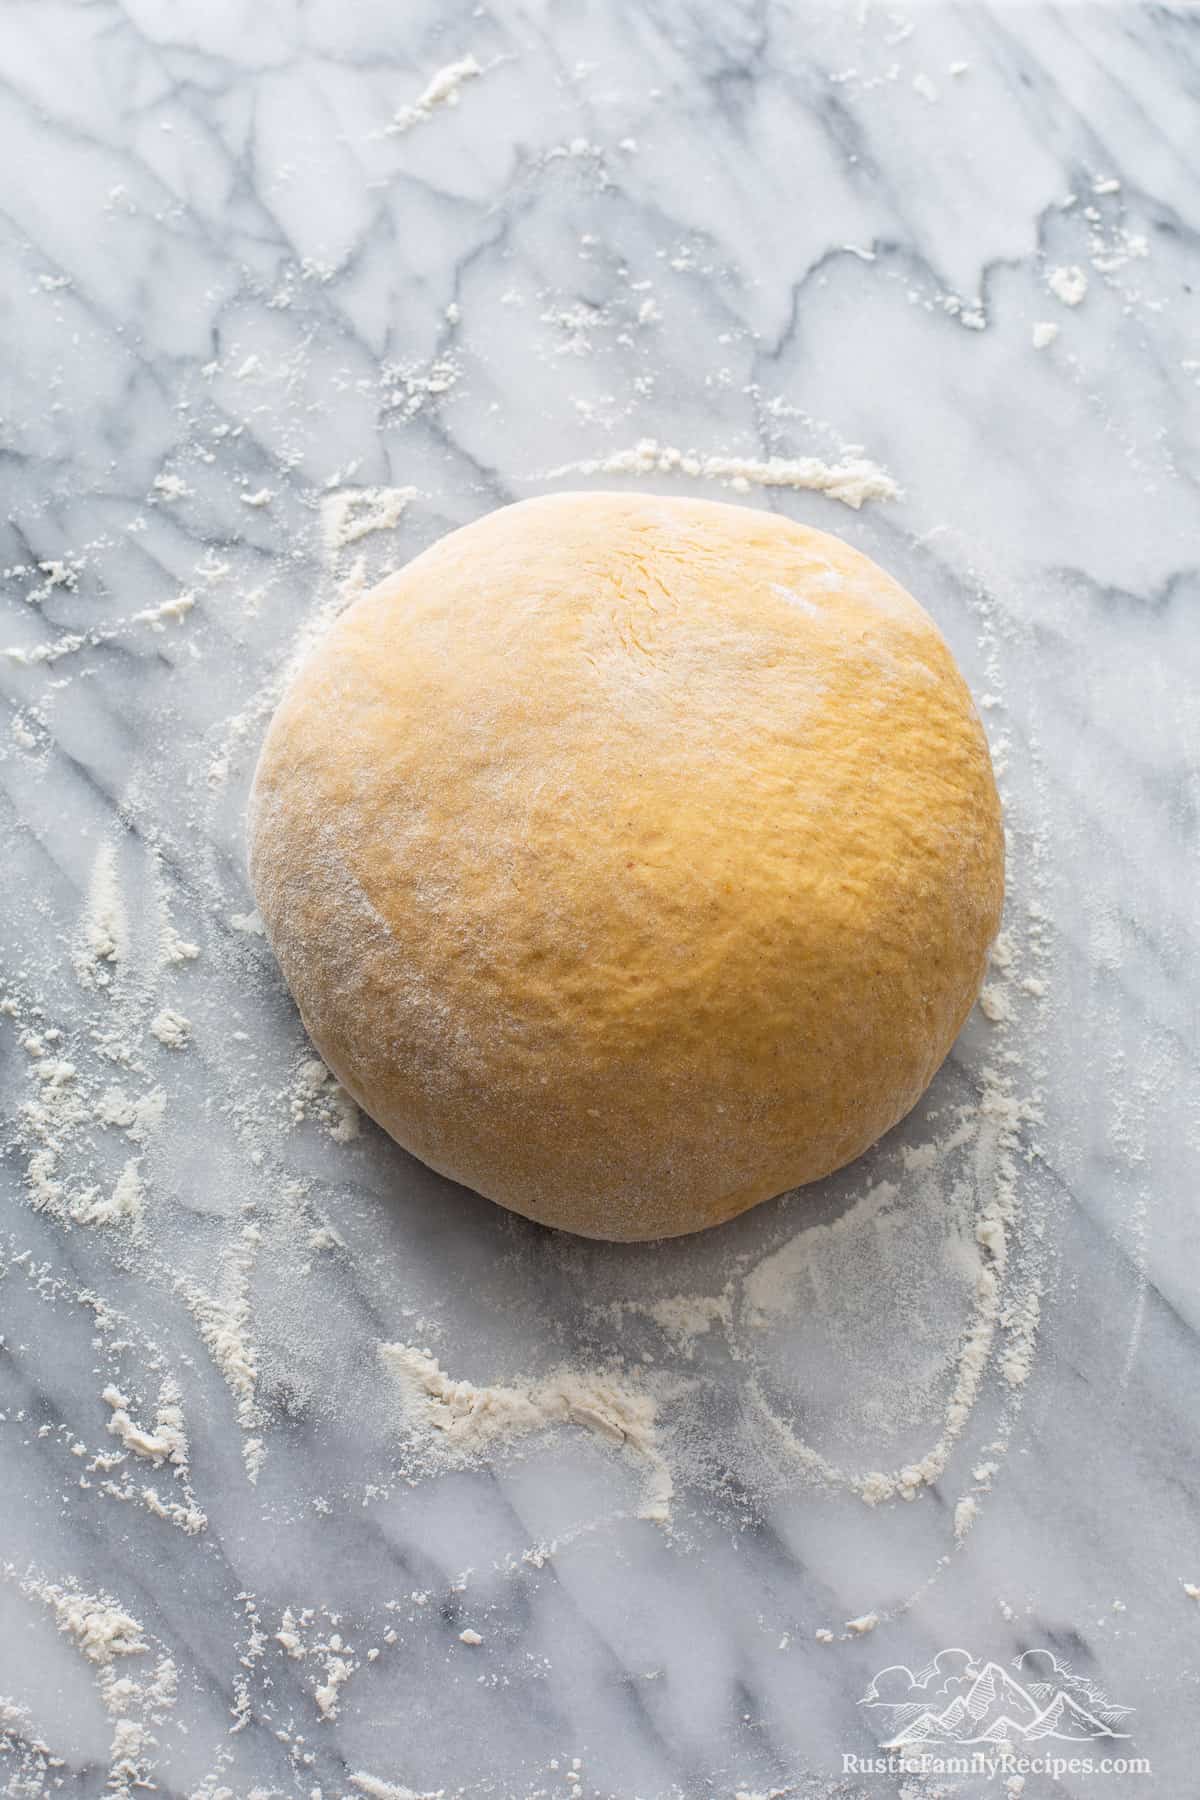 Ball of Pumpkin Apple Apricot Bread dough